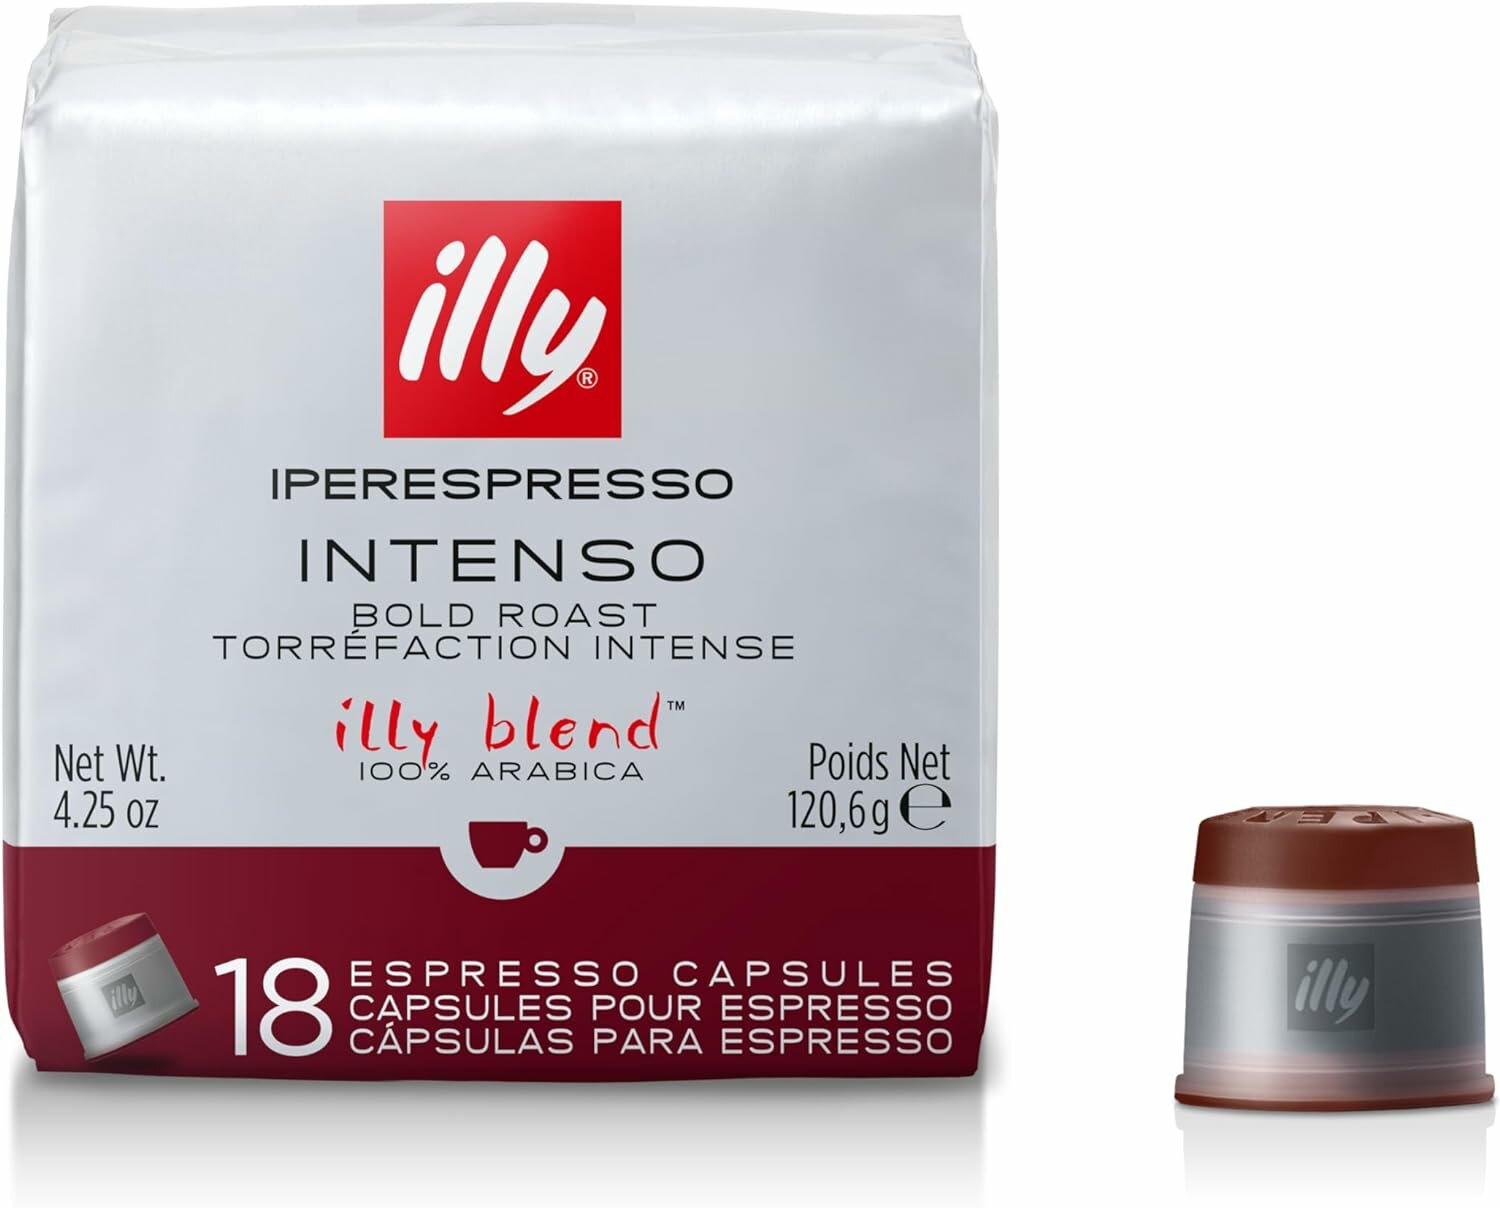 Кофе illy в капсулах iperEspresso (ipso), темной обжарки, 18 капс